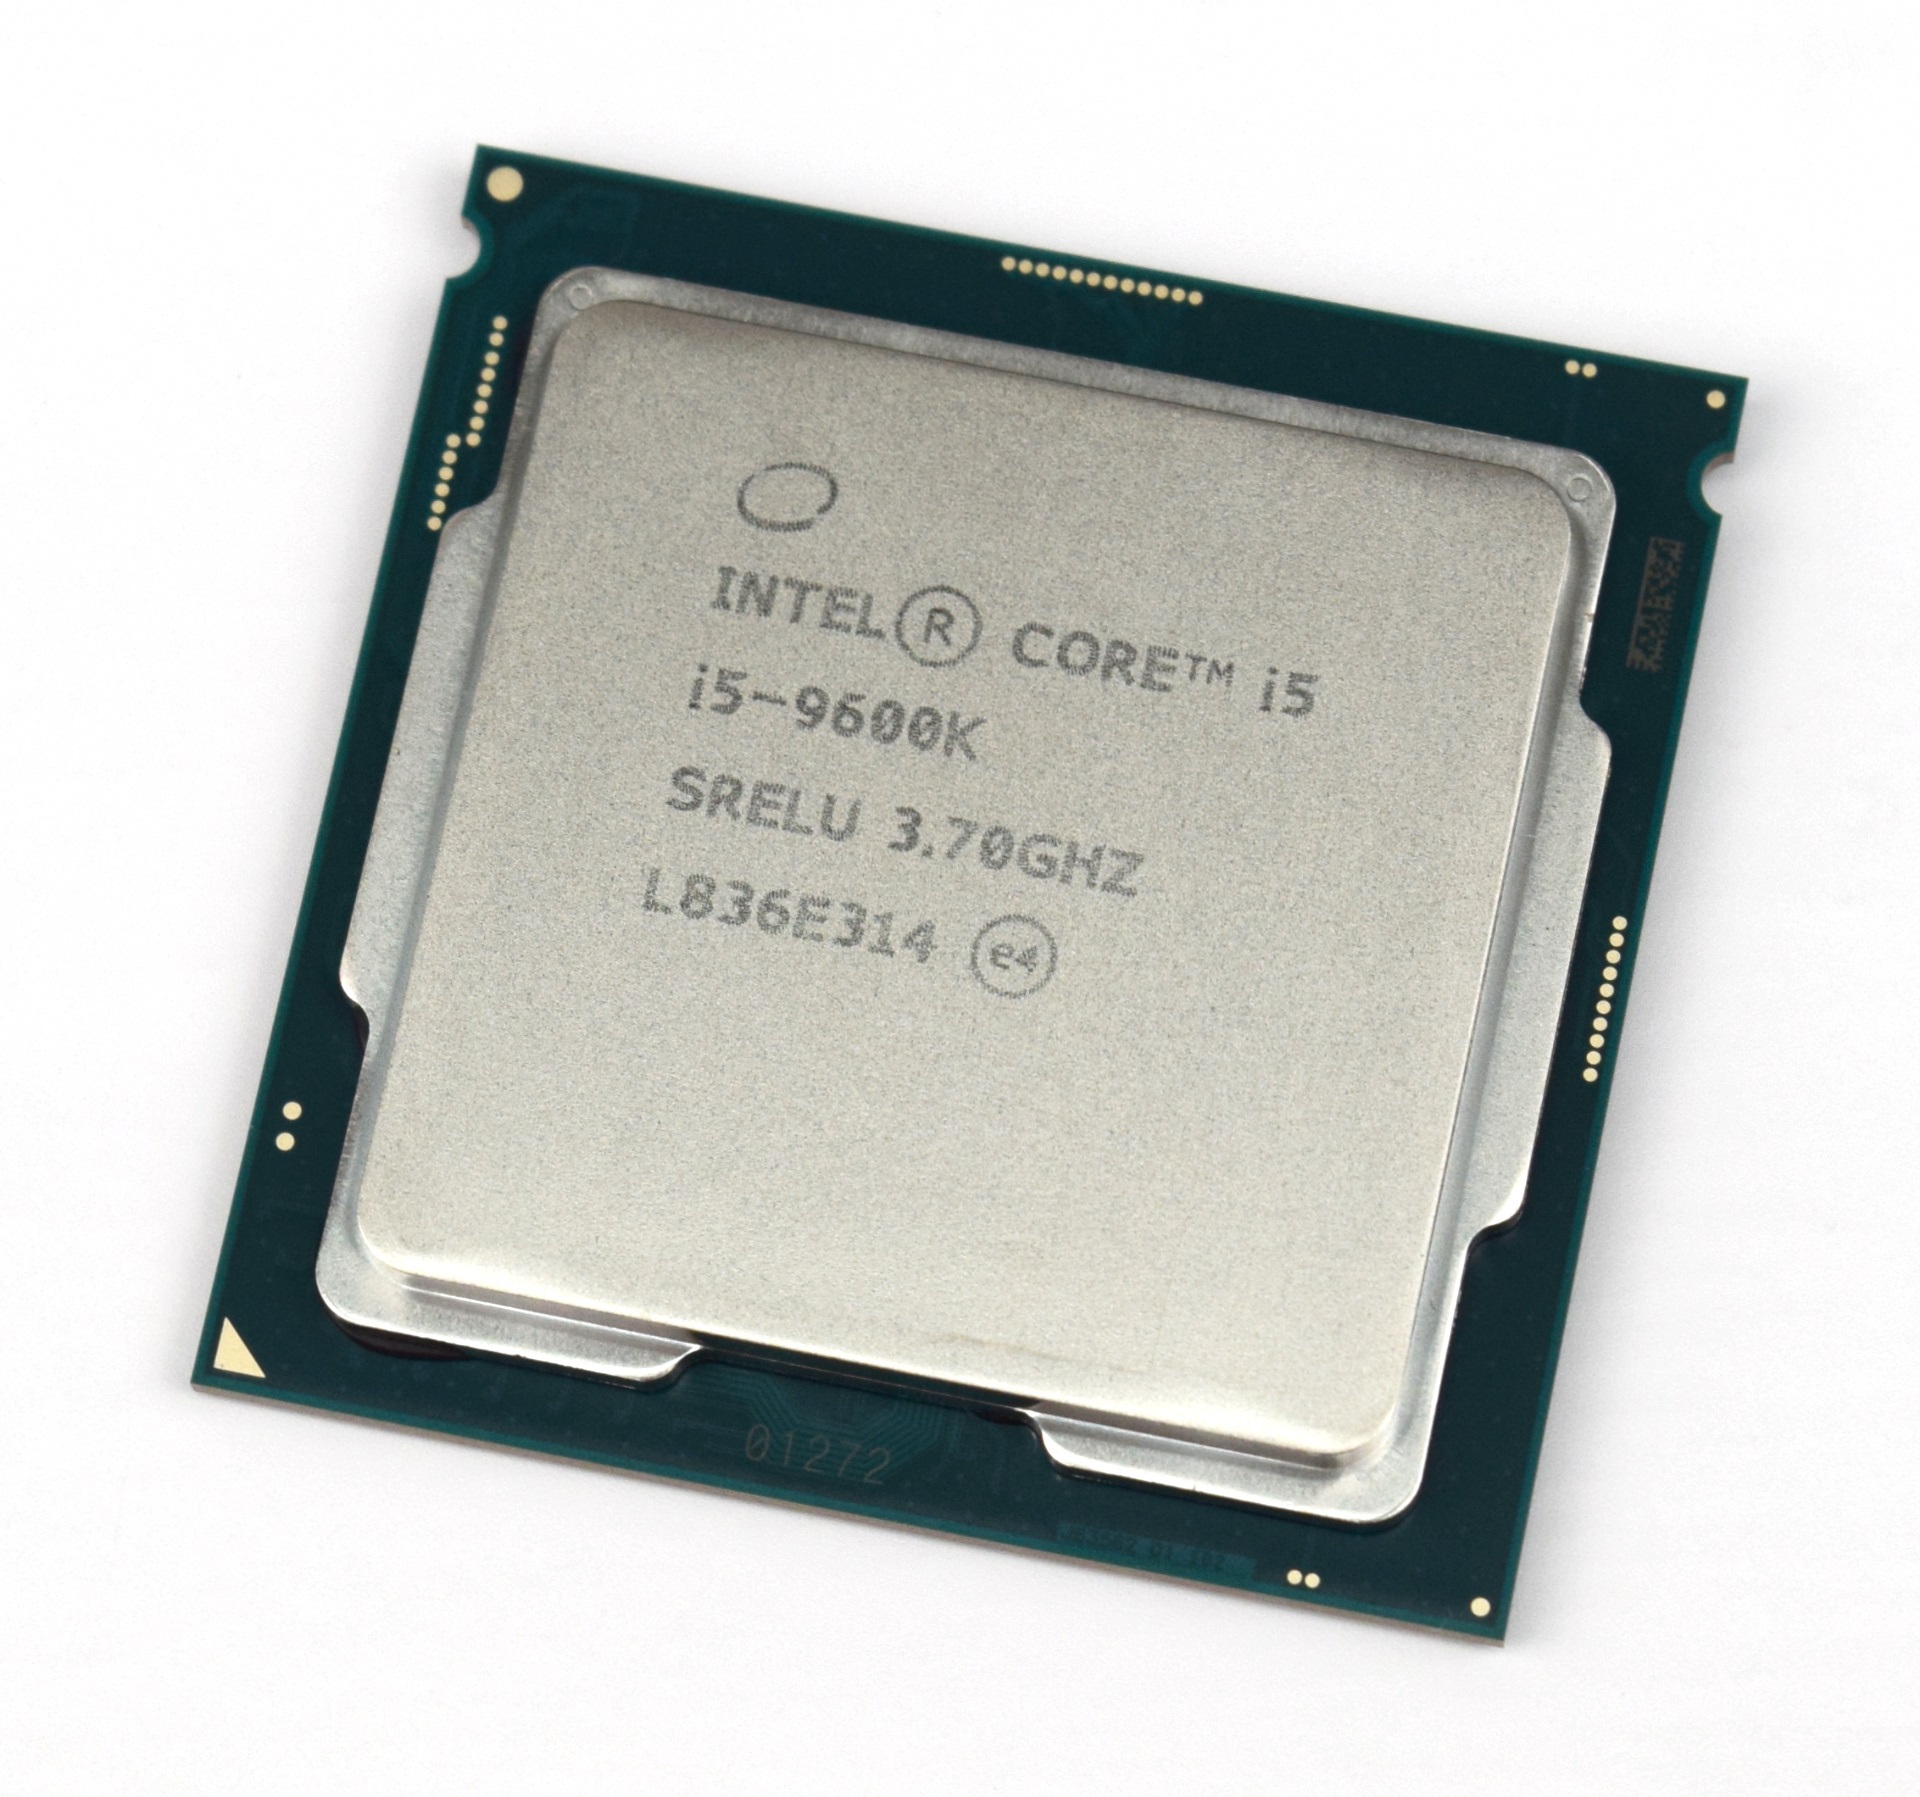 PC/タブレット PCパーツ Intel Core i5-9600K Desktop CPU Review - NotebookCheck.net Reviews